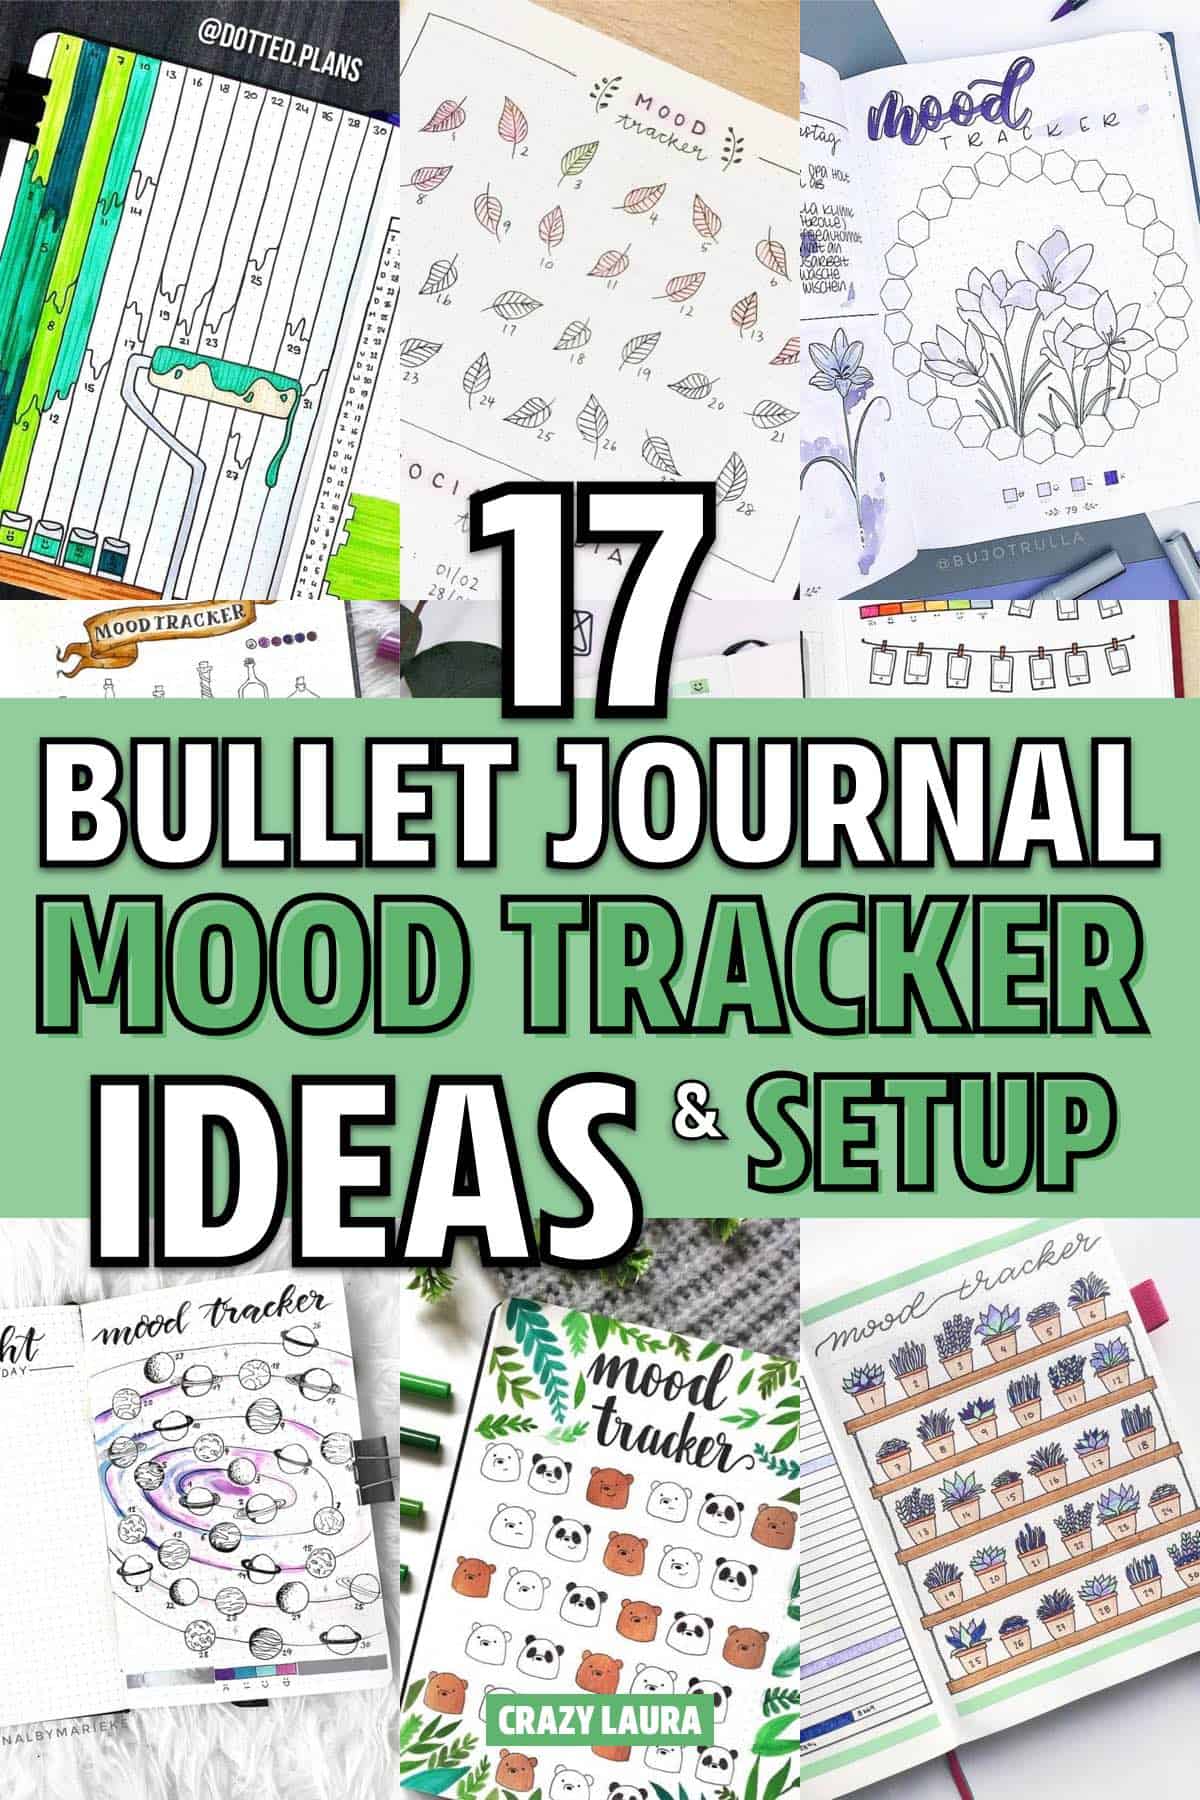 simple ways to setup mood tracker